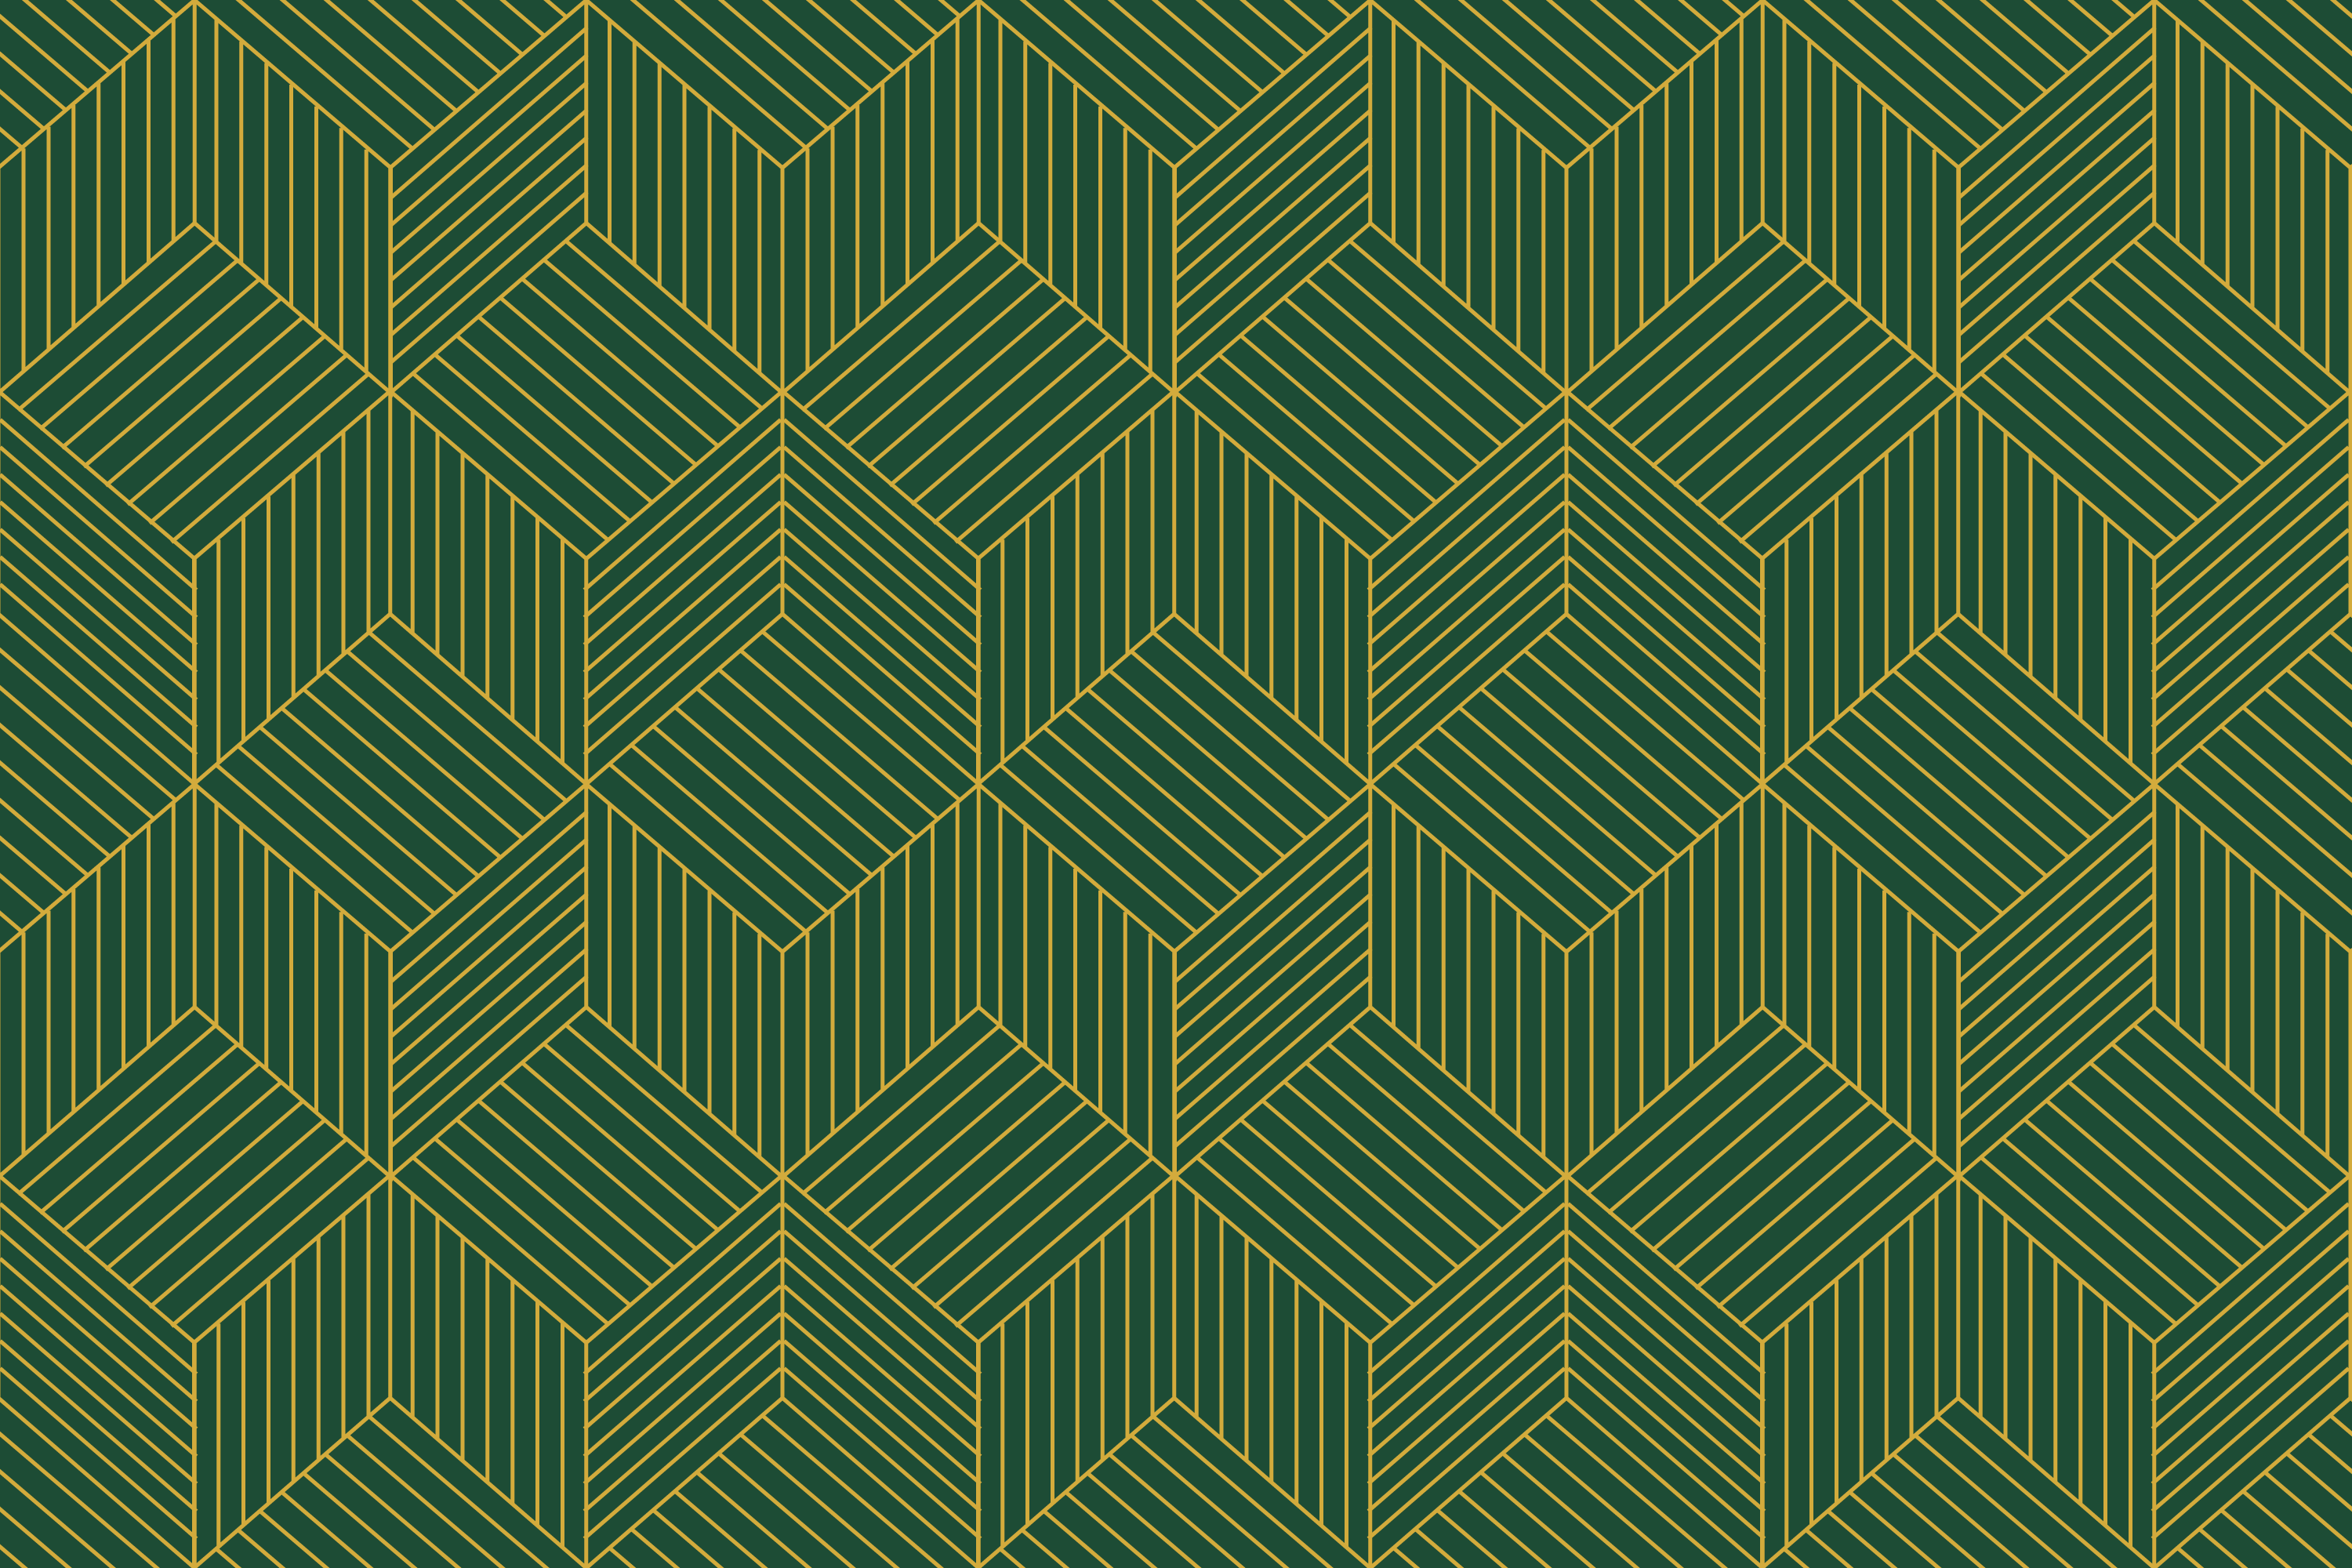 Green Geometric Wallpapers